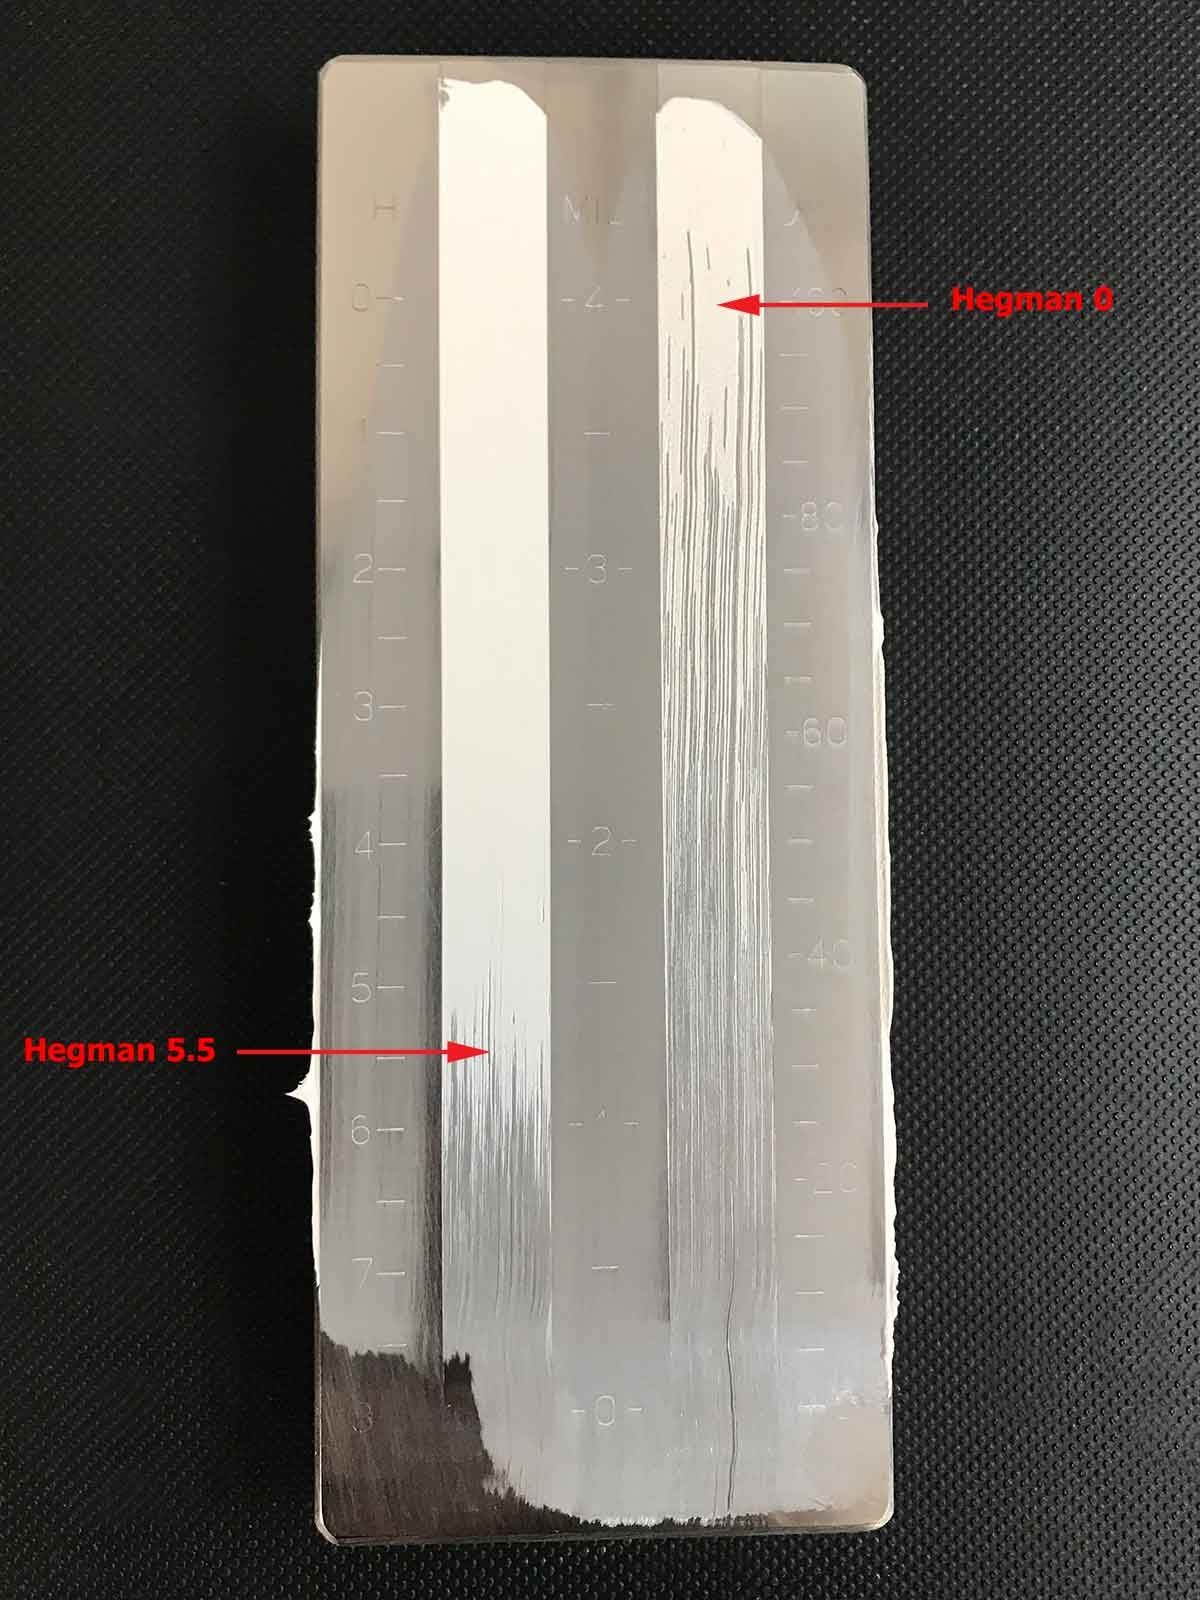 Hegman comparison of stack process flake white